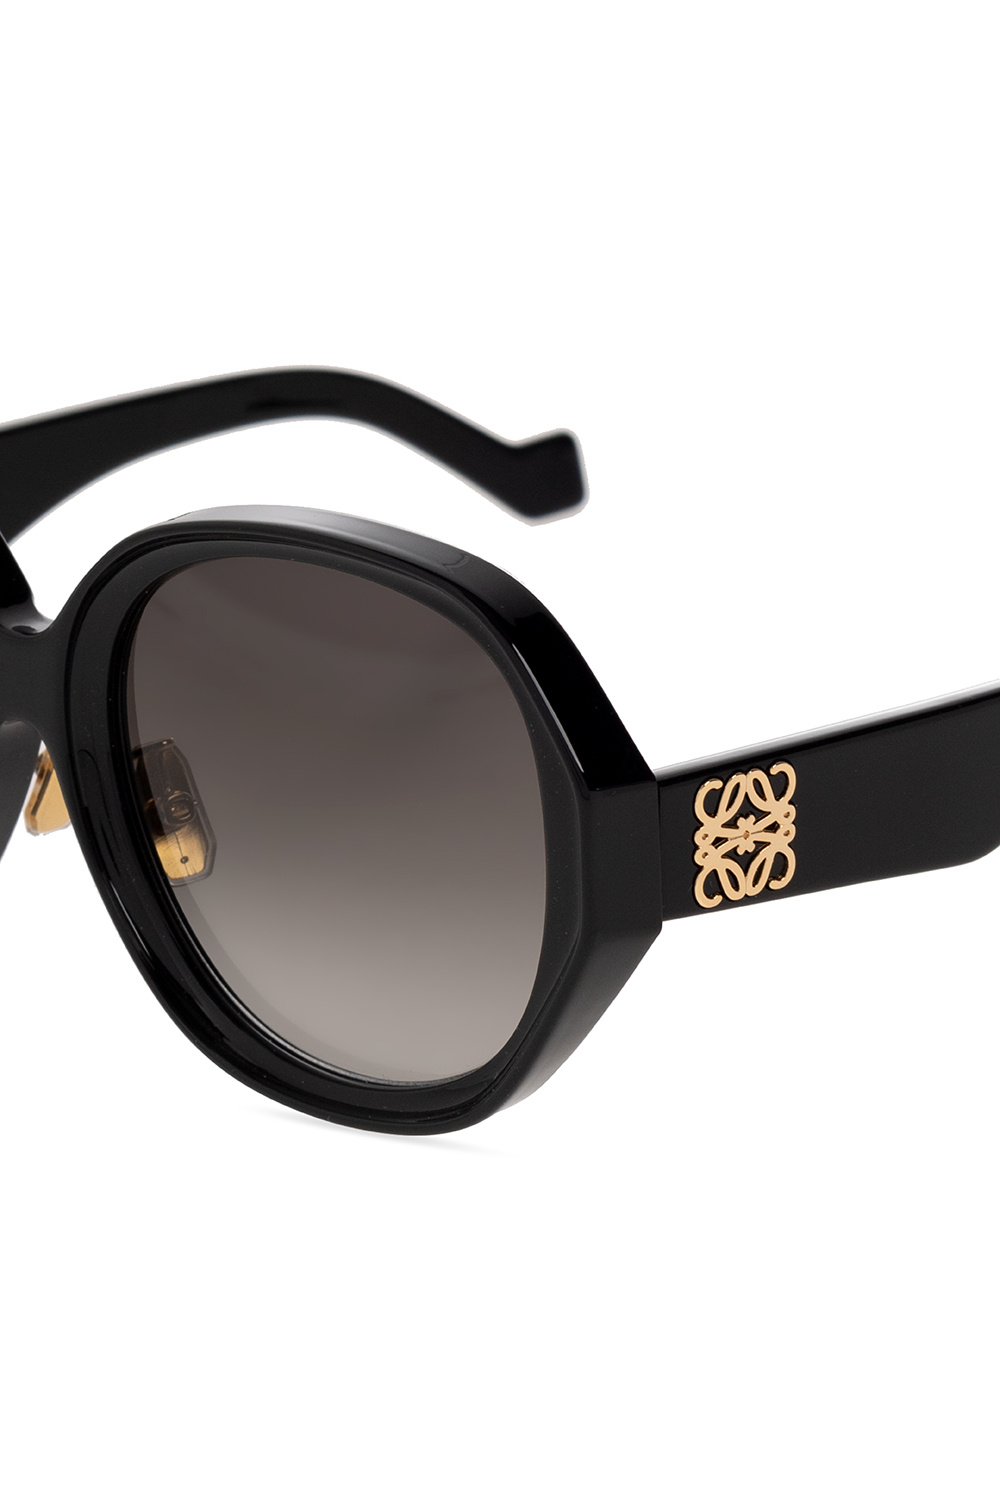 Loewe miu miu eyewear crystal embellished rectangle frame sunglasses item